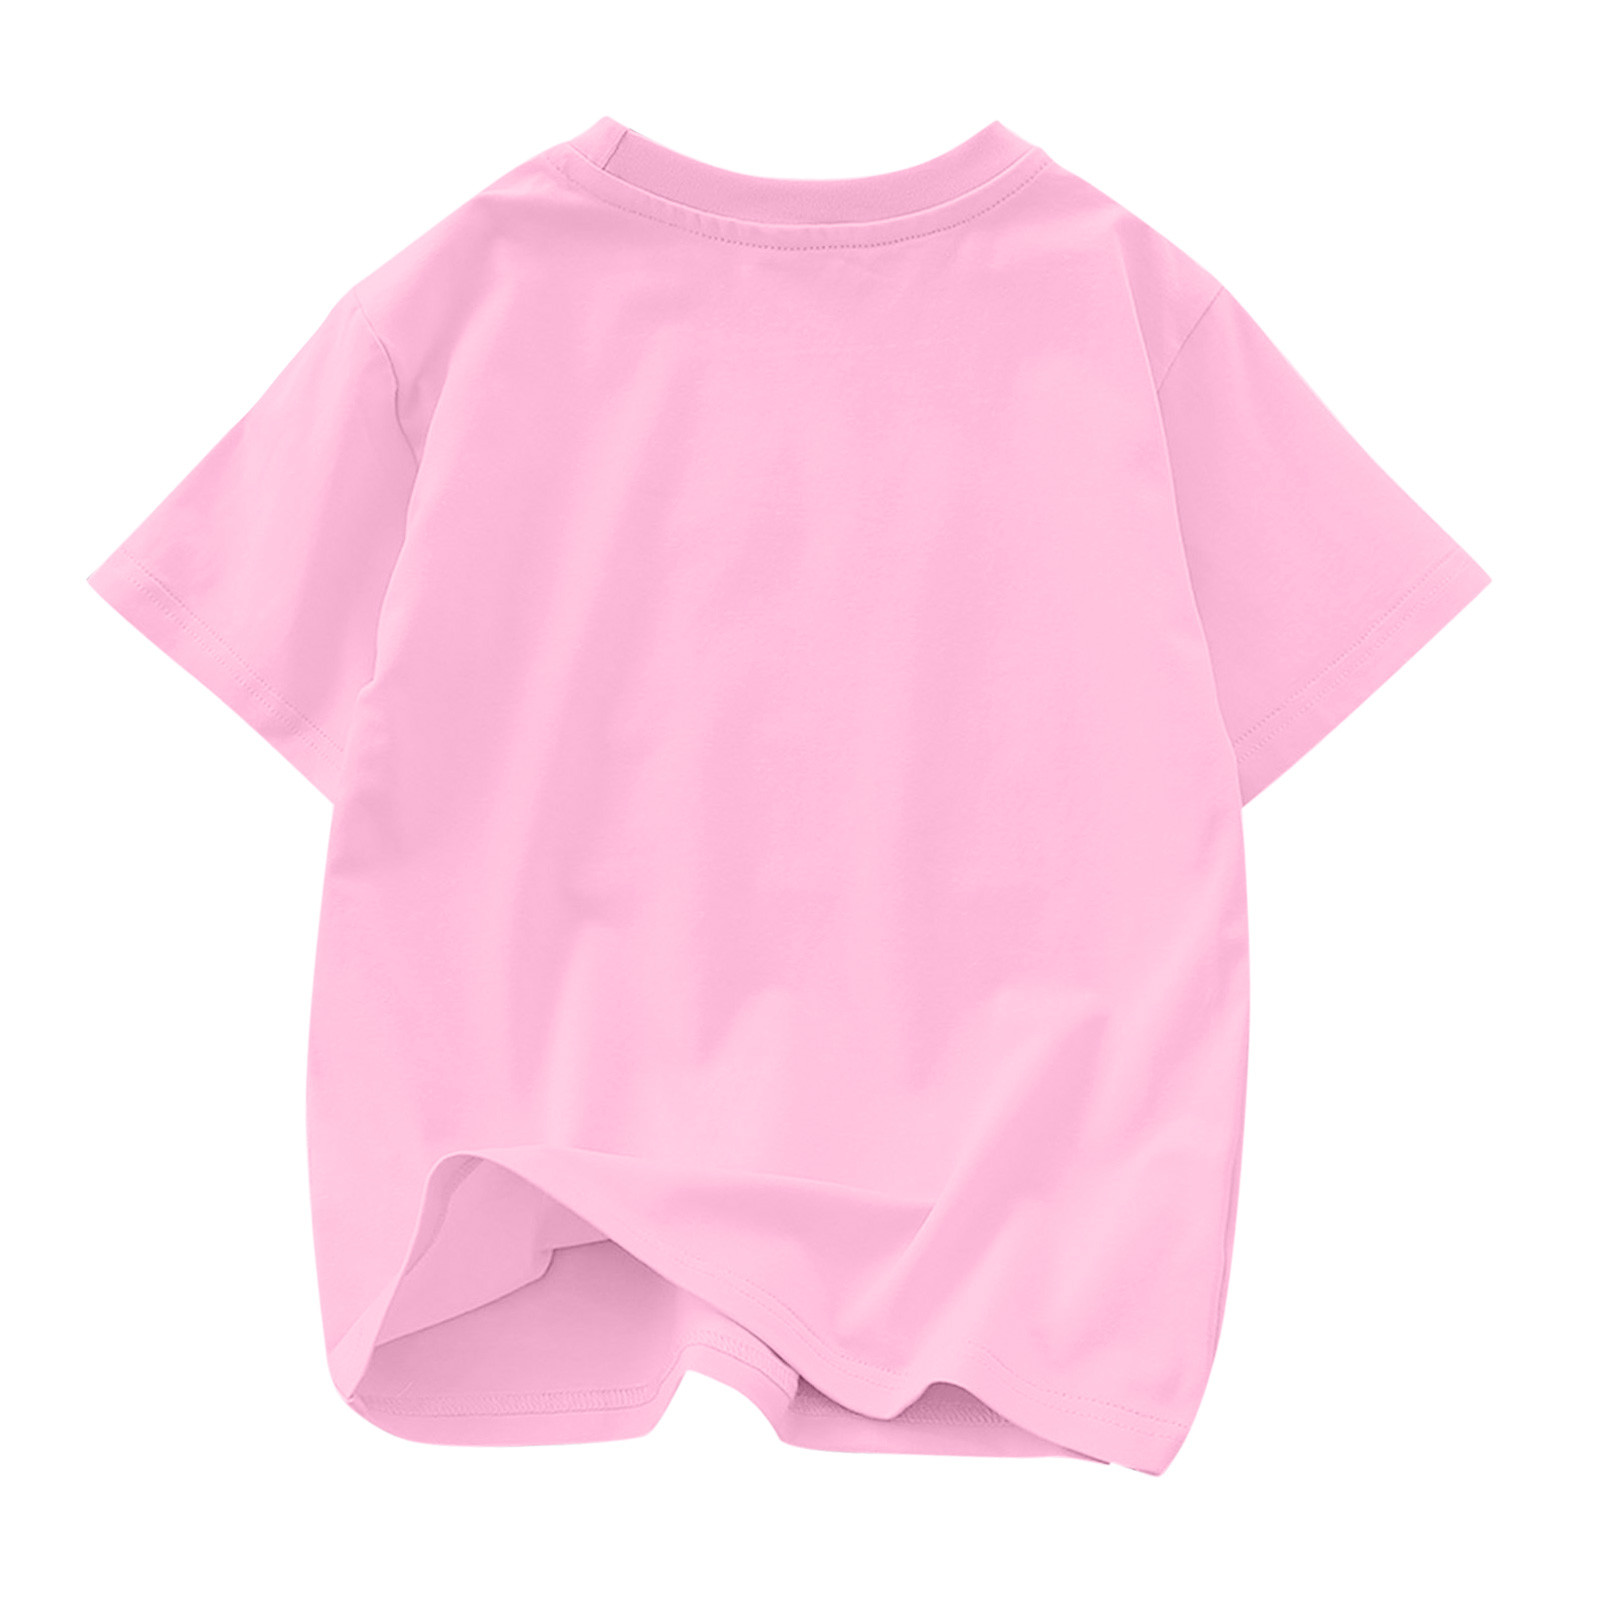 BLVB St Patricks Day Shirts Toddler Boys Girls Clover Summer T-Shirts ...